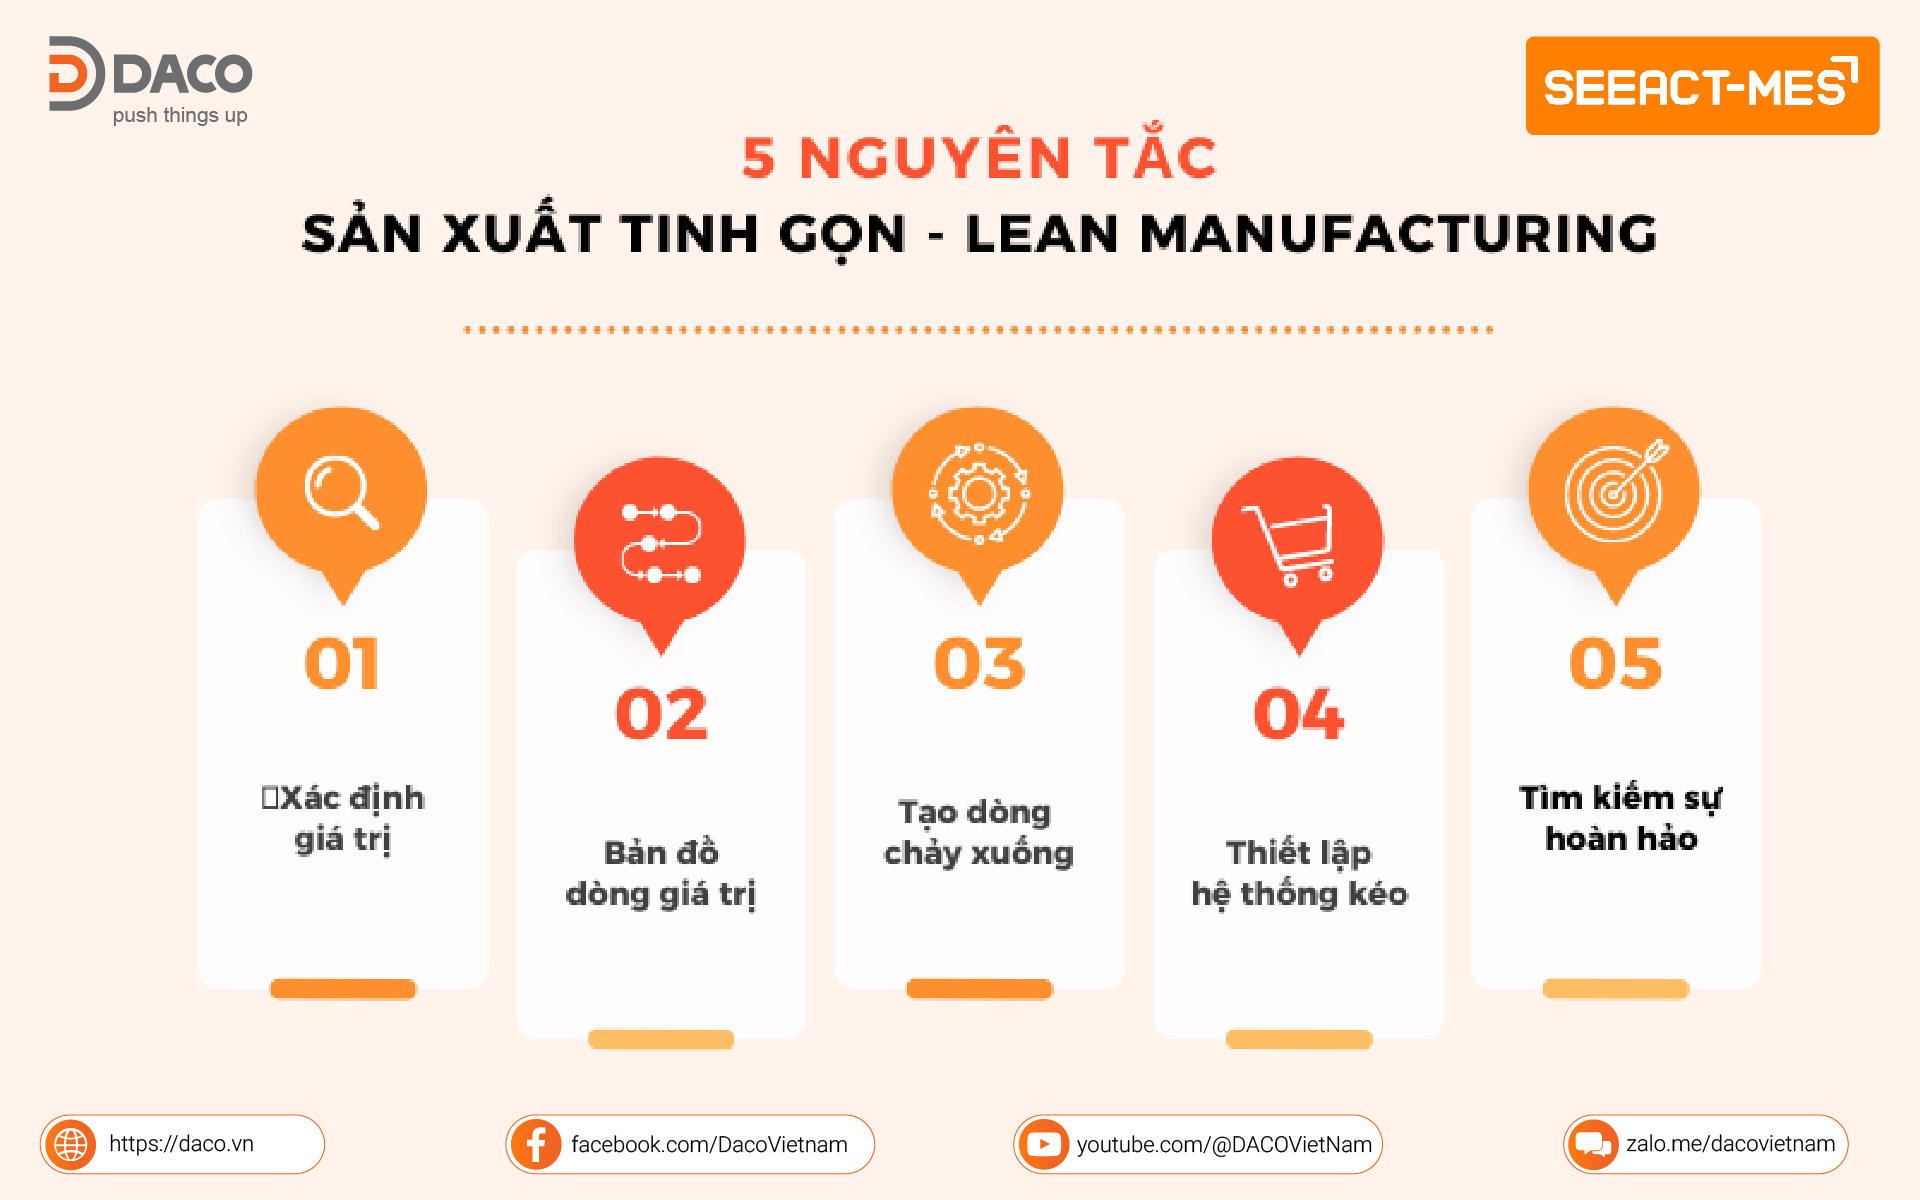 5 nguyen tac co ban trong van hanh san xuat tinh gon lean manufacturing